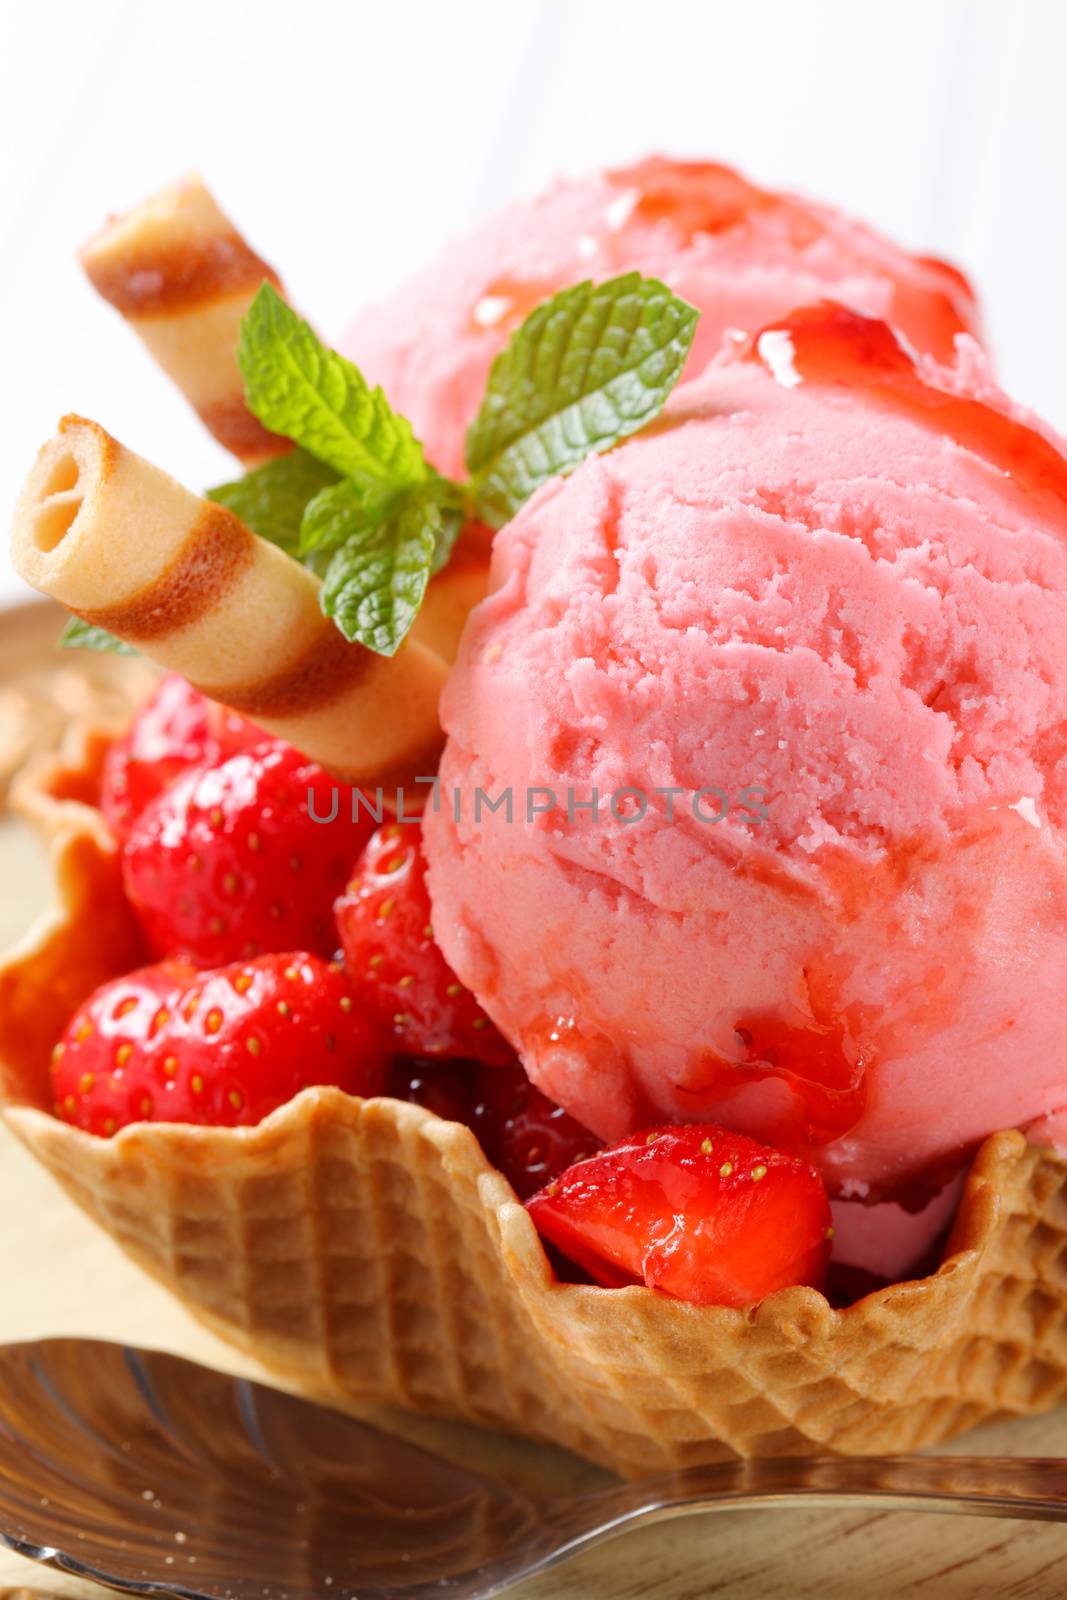 Strawberry ice cream sundae by Digifoodstock